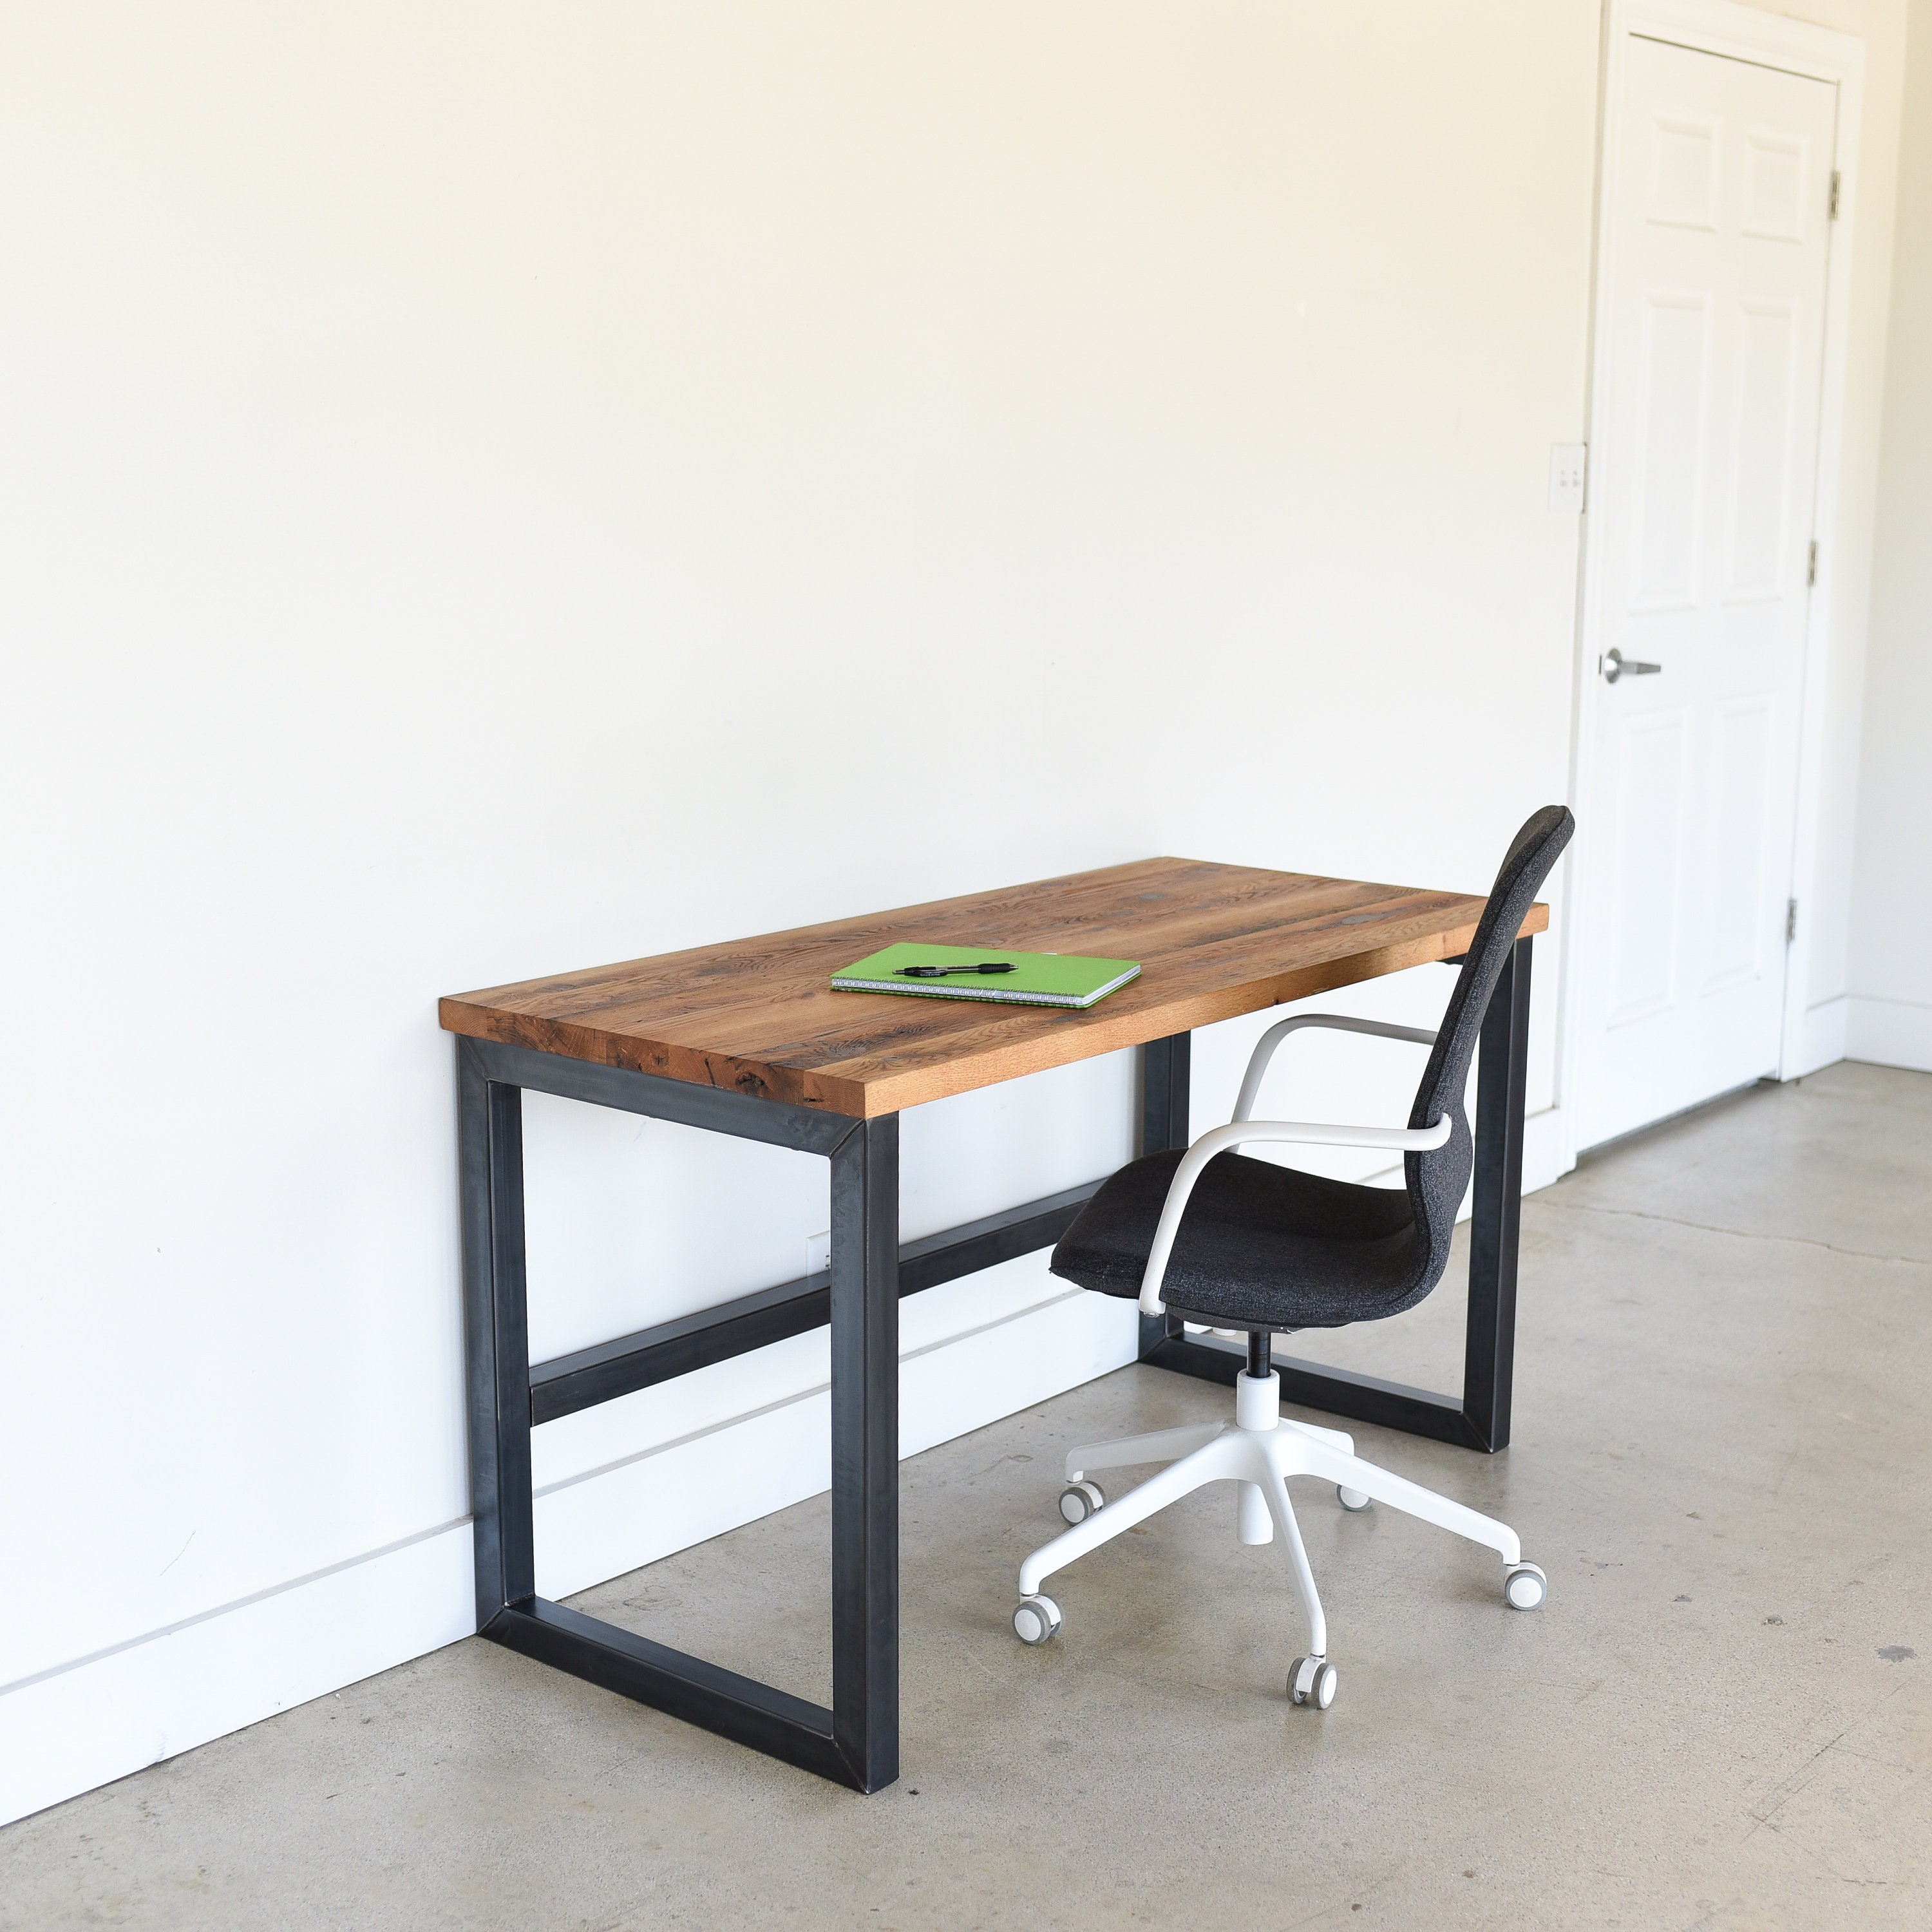 Industrial Wood Desk 2 X 2 Metal Frame – What We Make, 40% Off